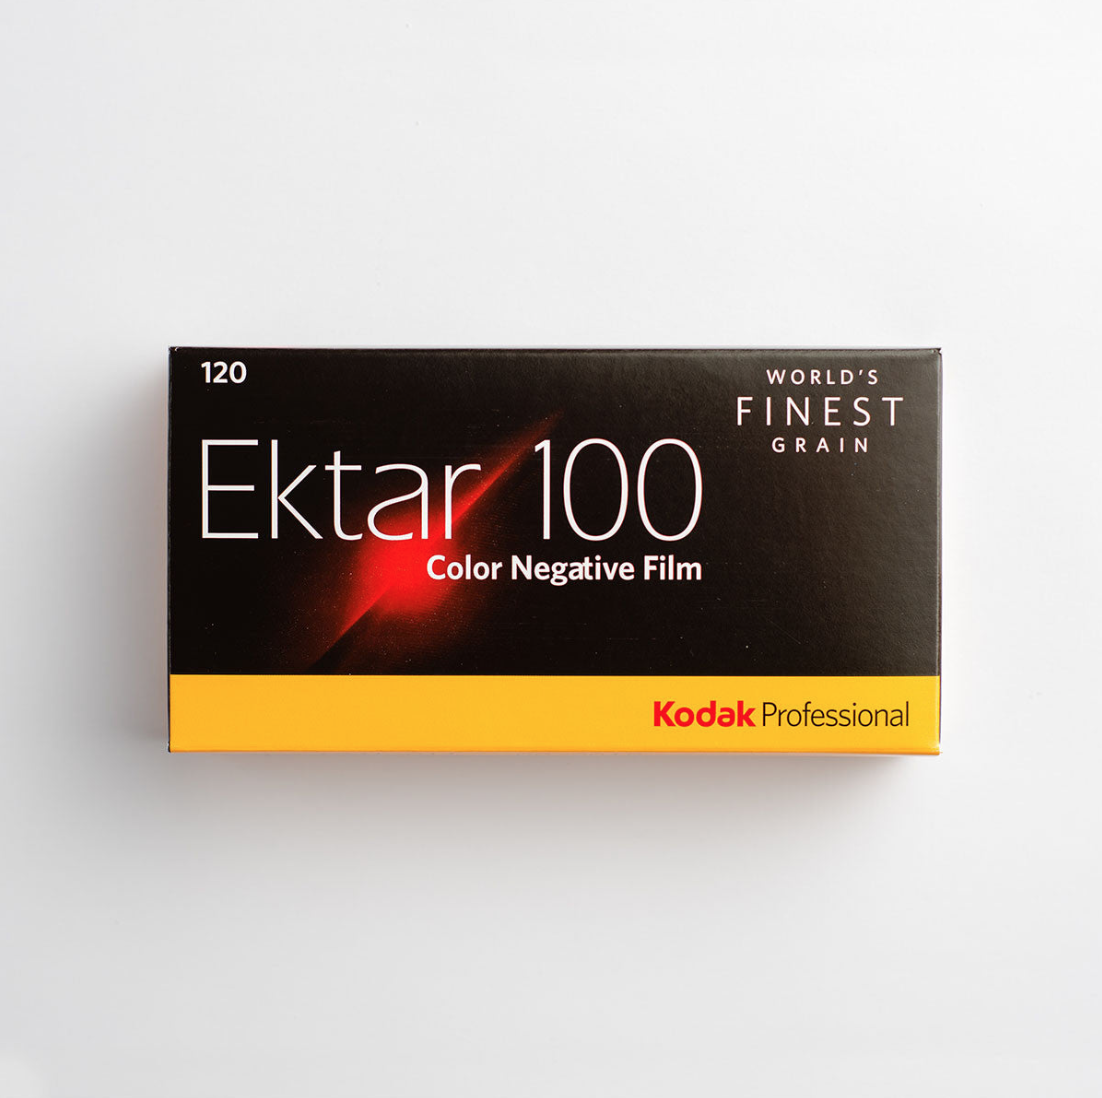 Kodak Ektar 100 120 - 5 pack